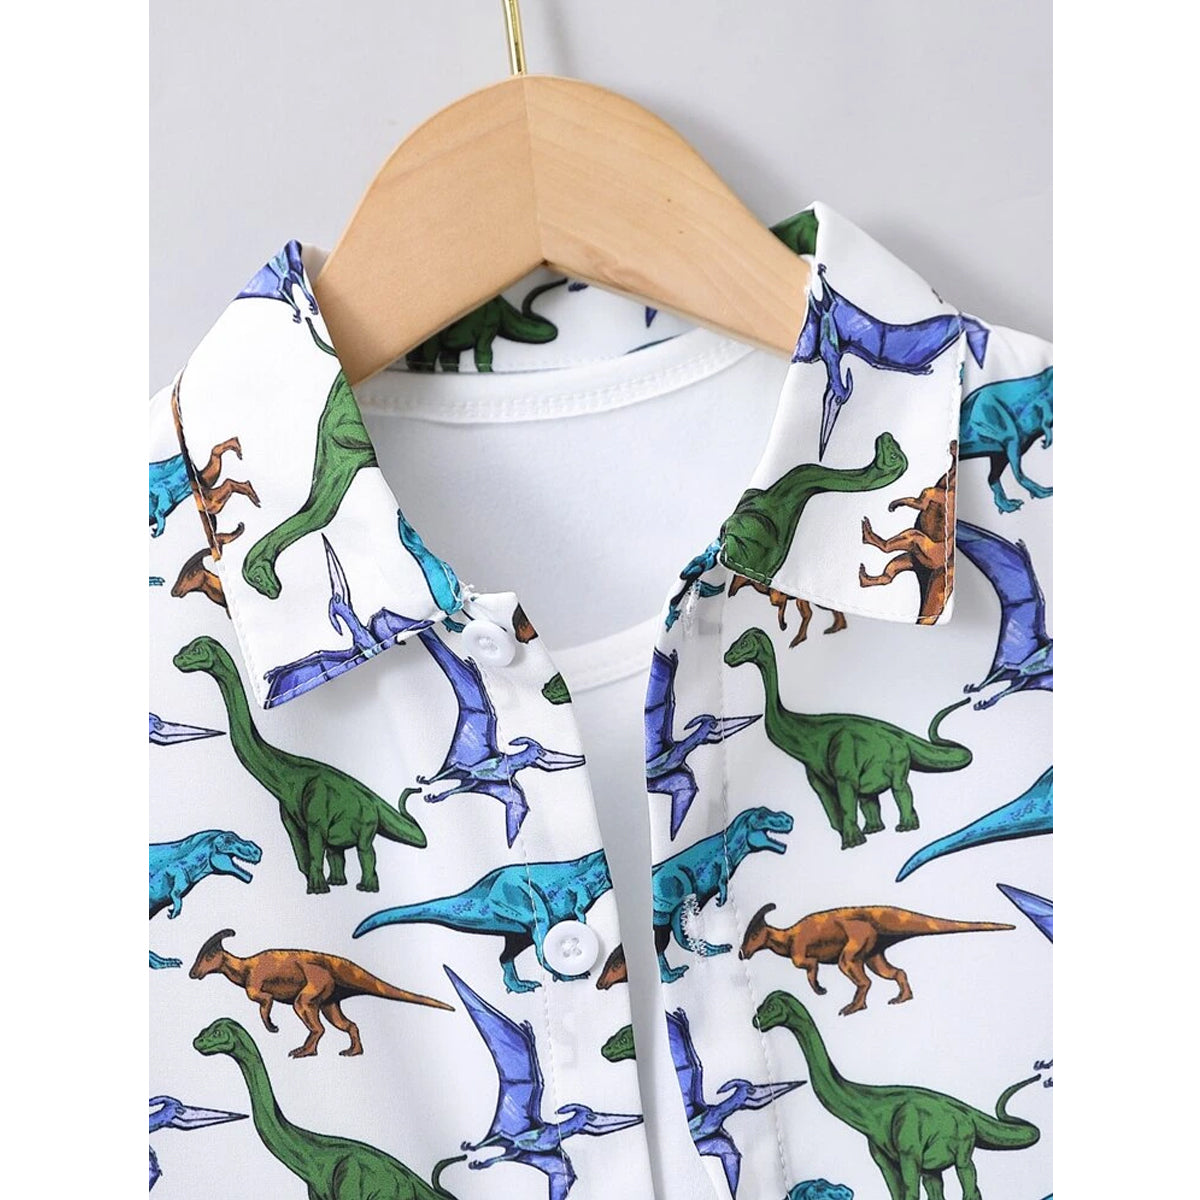 Venutaloza Boy's Dinosaur Designer Button Front Shirt For Boy.